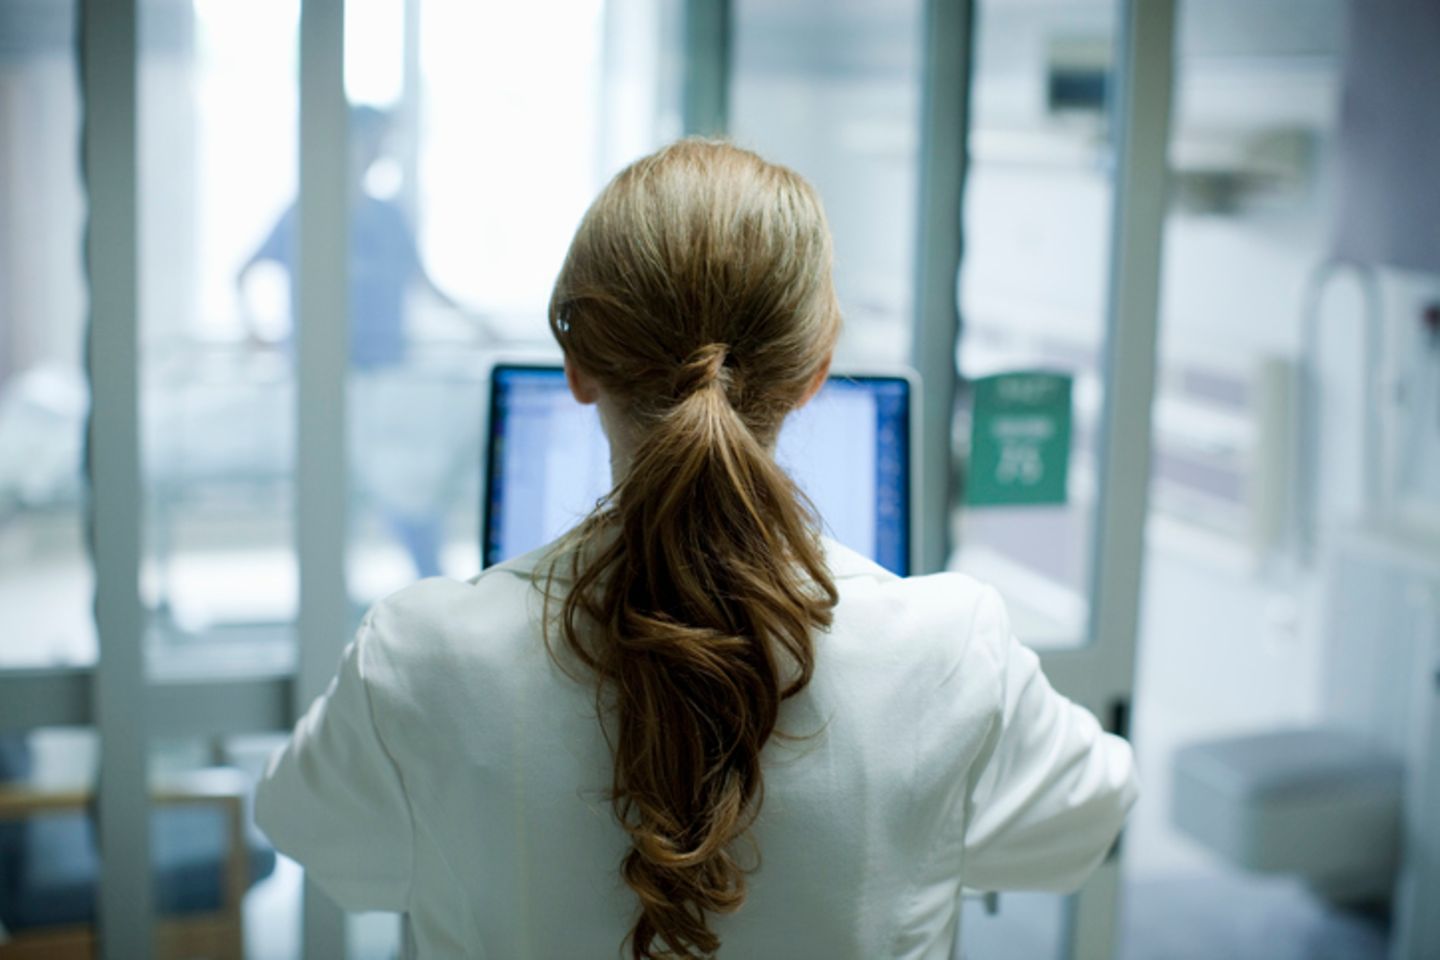 Mujer mirando a un portátil en un hospital vista desde atrás